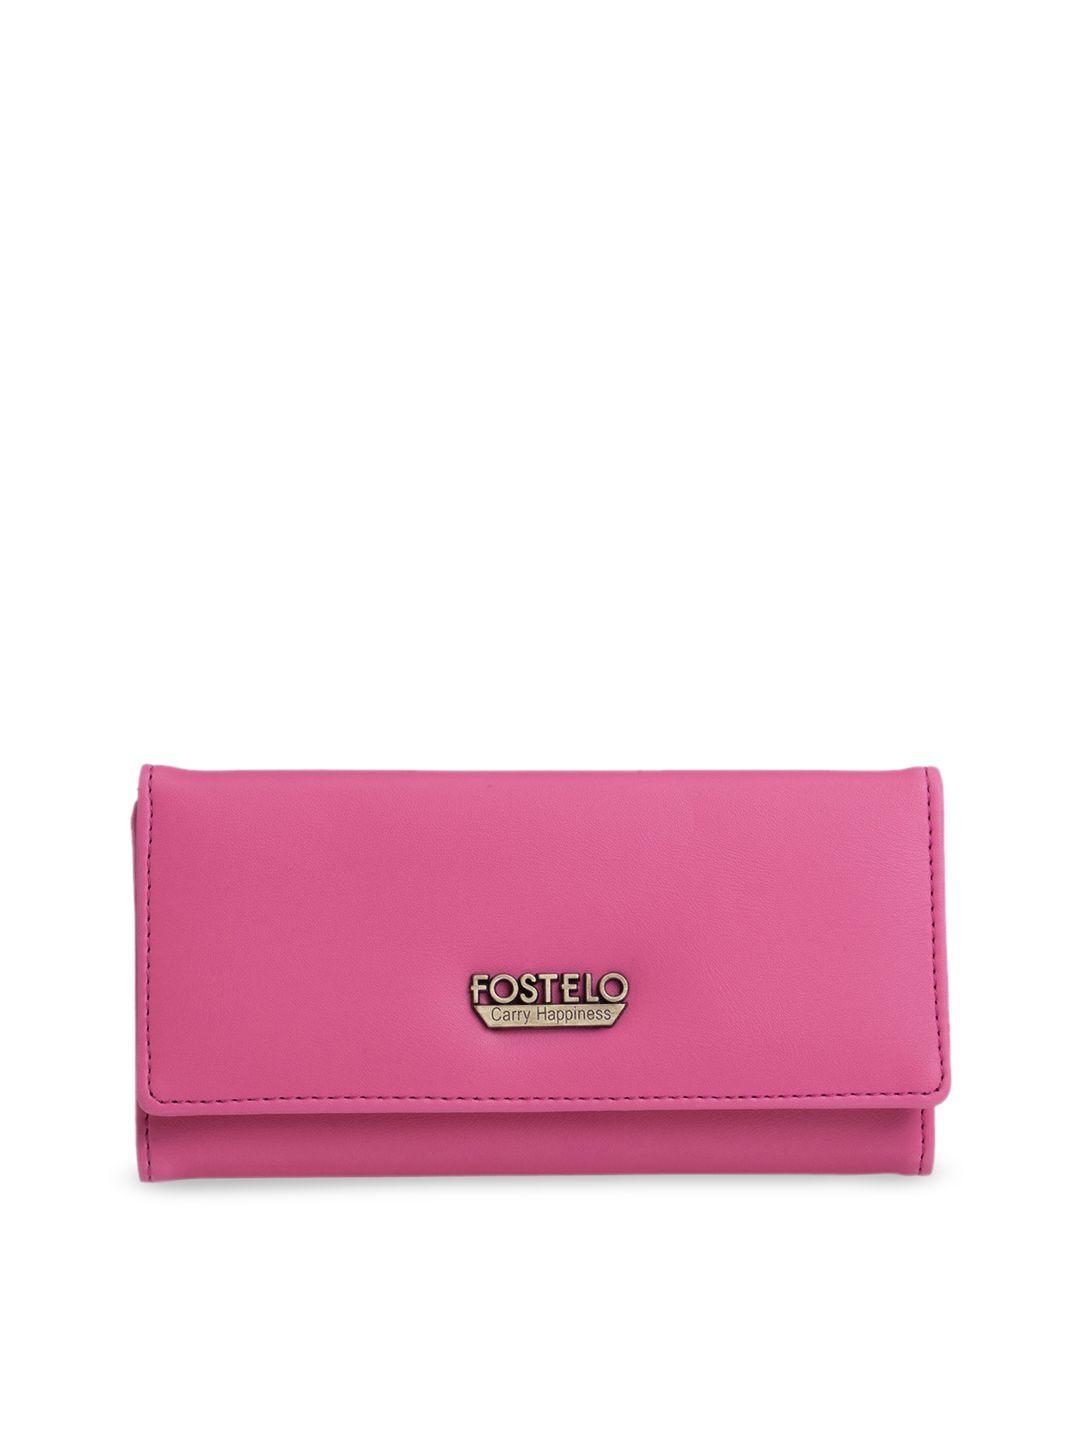 fostelo women pink pu envelope wallet